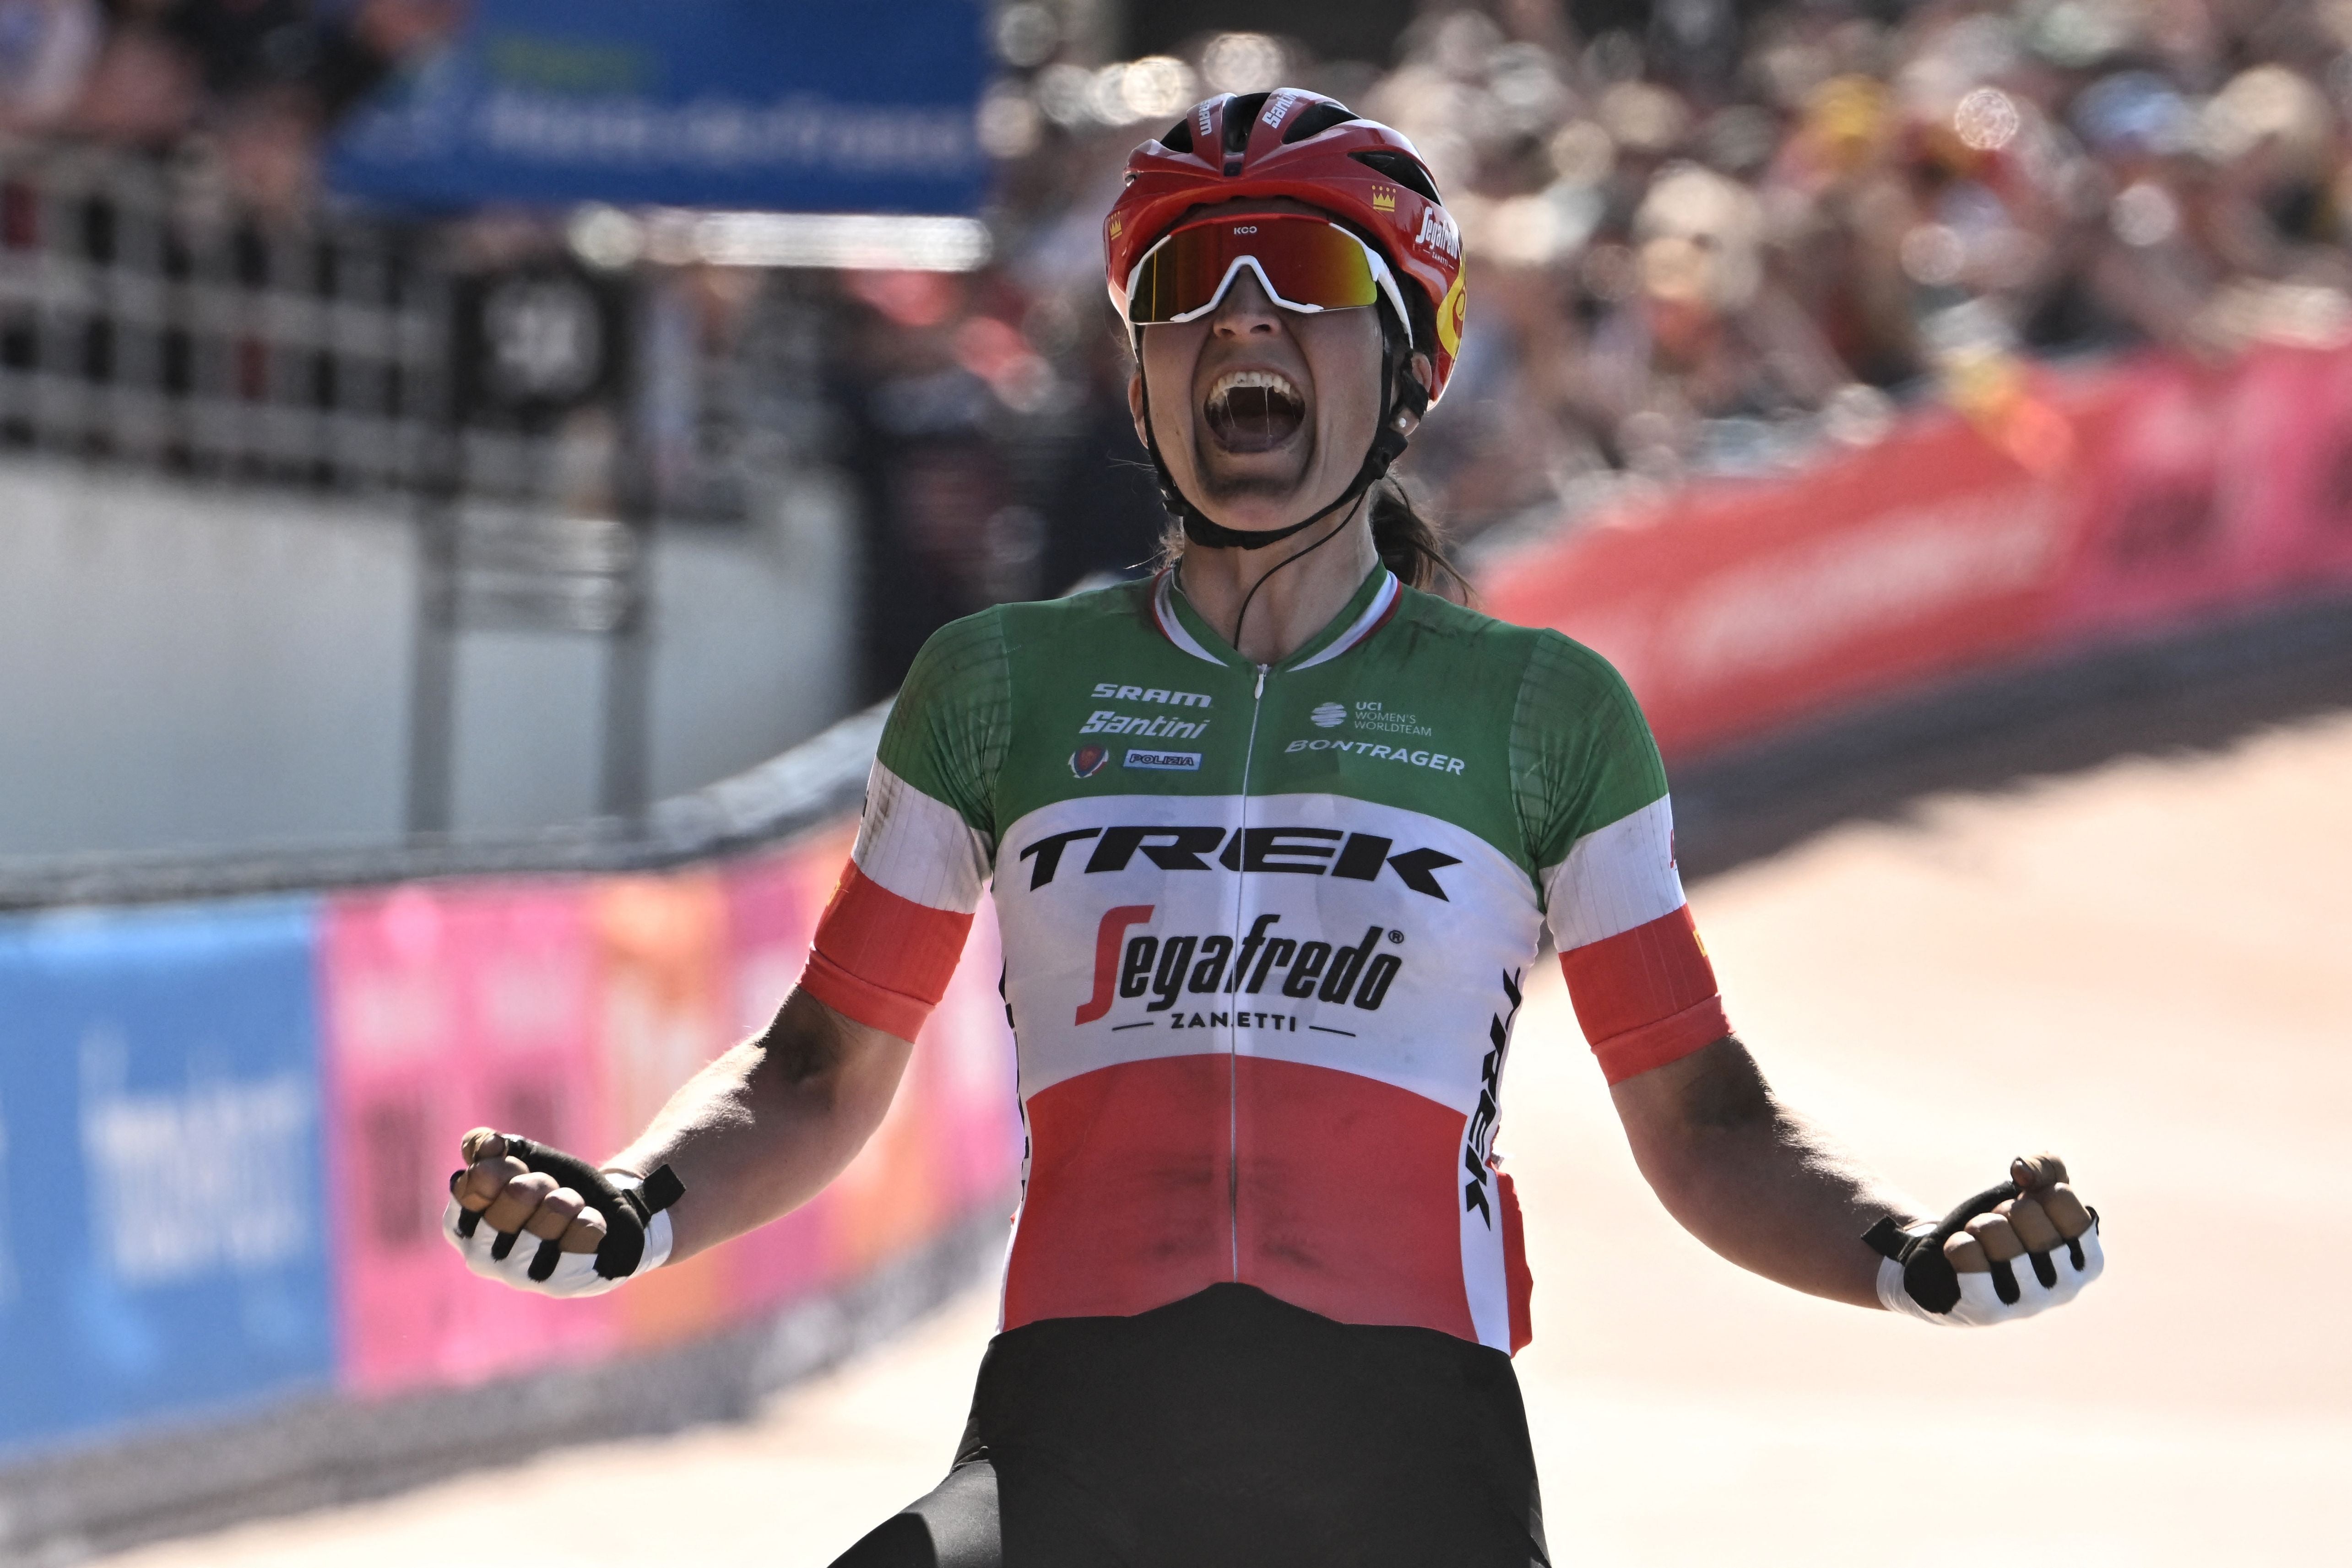 Elisa Longo Borghini claims second edition of womens Paris-Roubaix The Independent